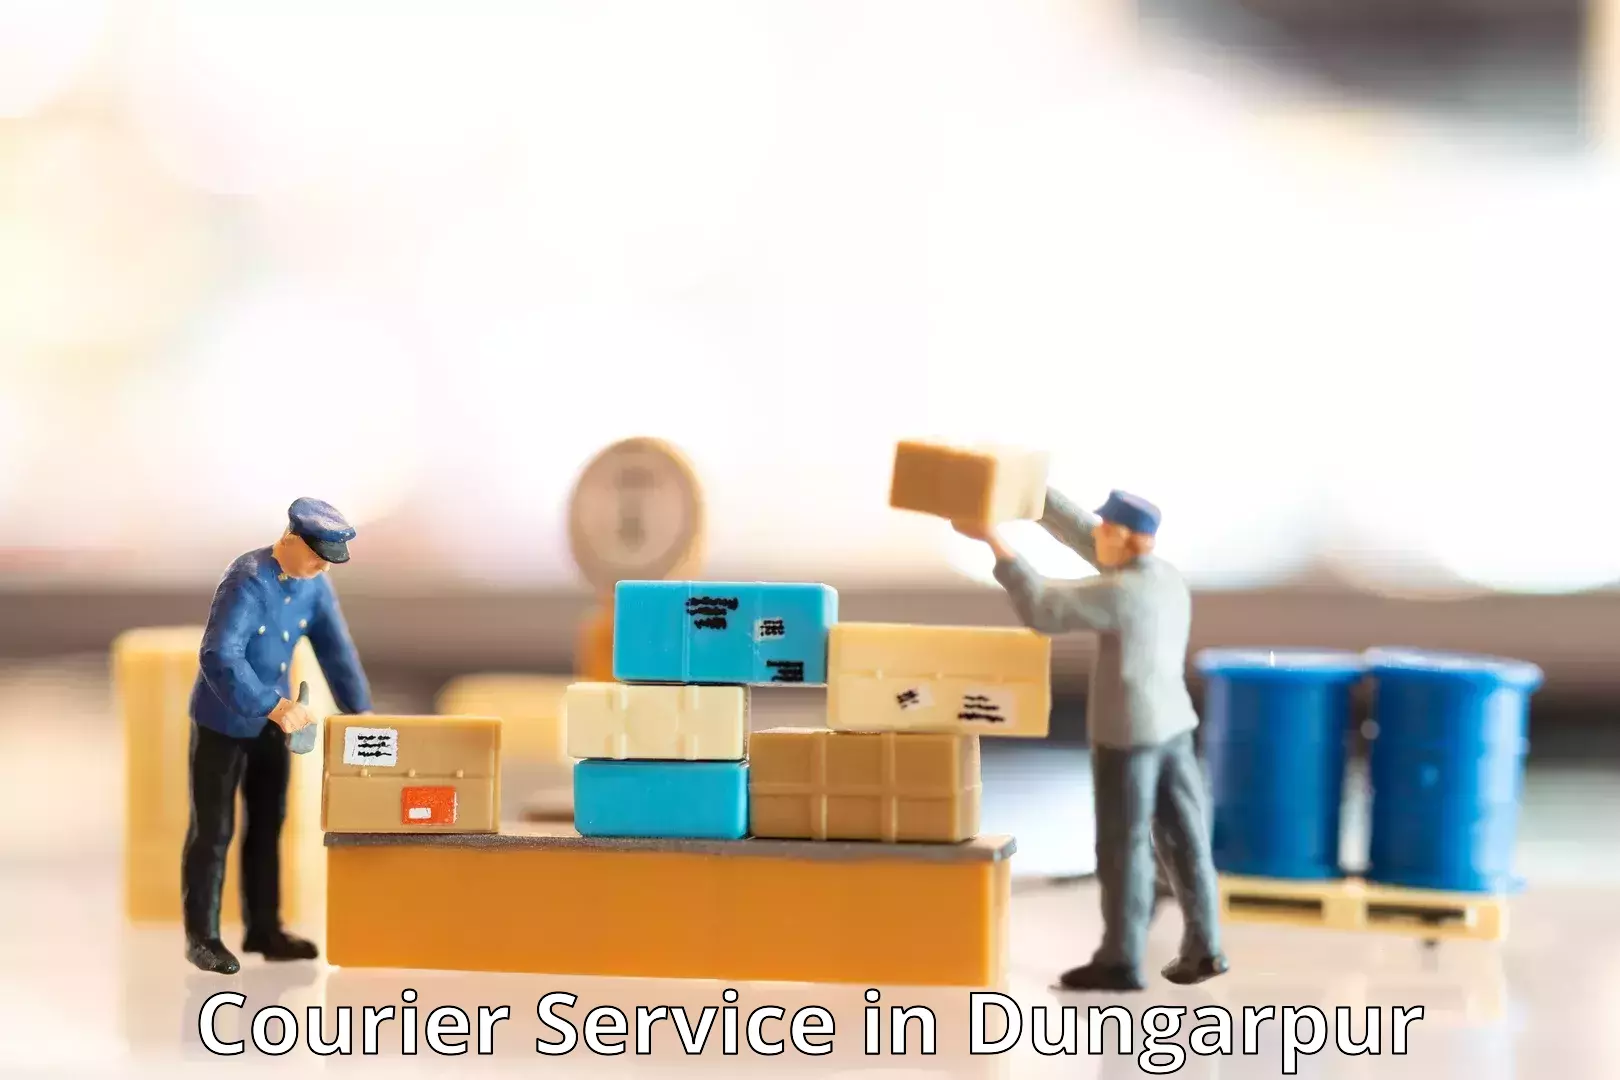 Courier service comparison in Dungarpur